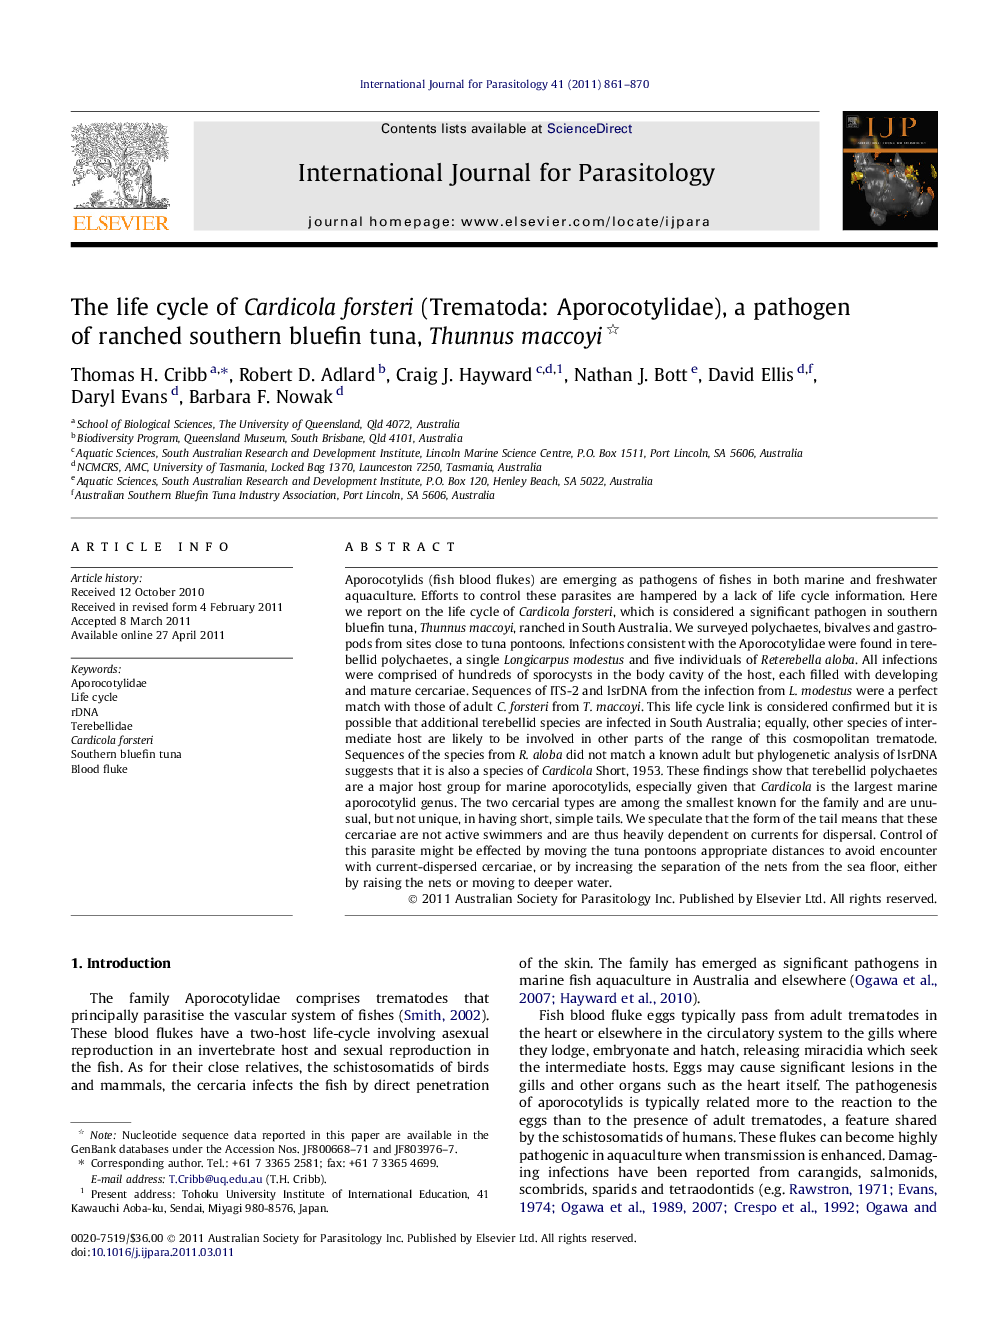 The life cycle of Cardicola forsteri (Trematoda: Aporocotylidae), a pathogen of ranched southern bluefin tuna, Thunnus maccoyi